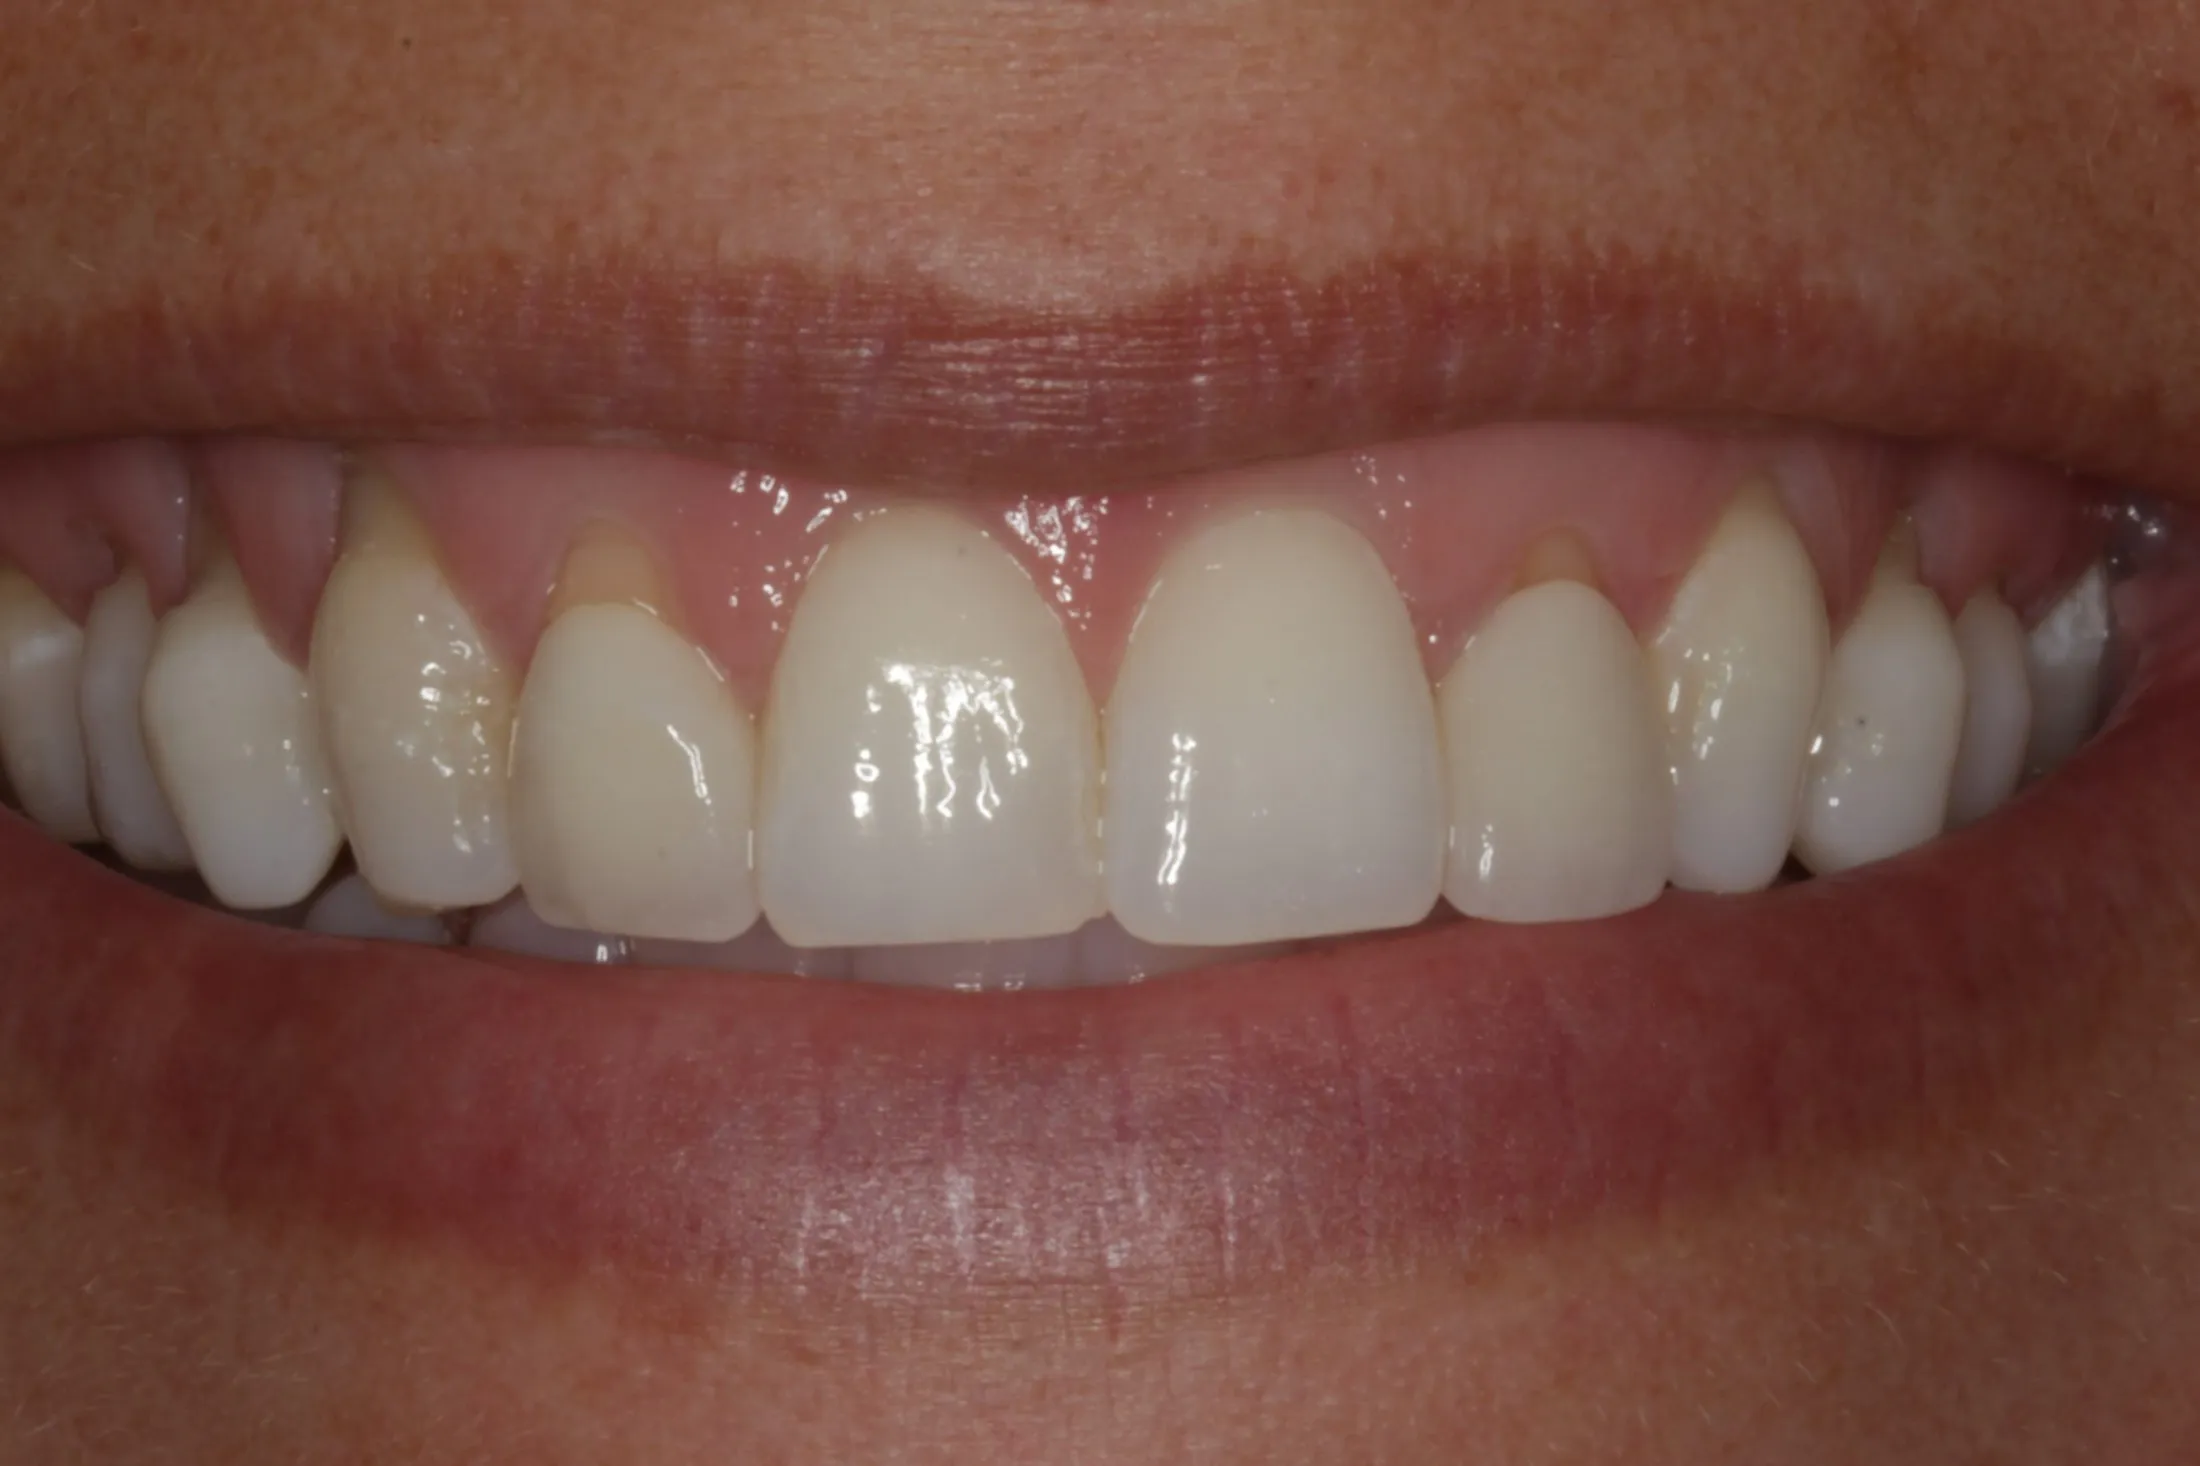 Initial condition of gums before undergoing gum grafting treatment at Westport Periodontics.